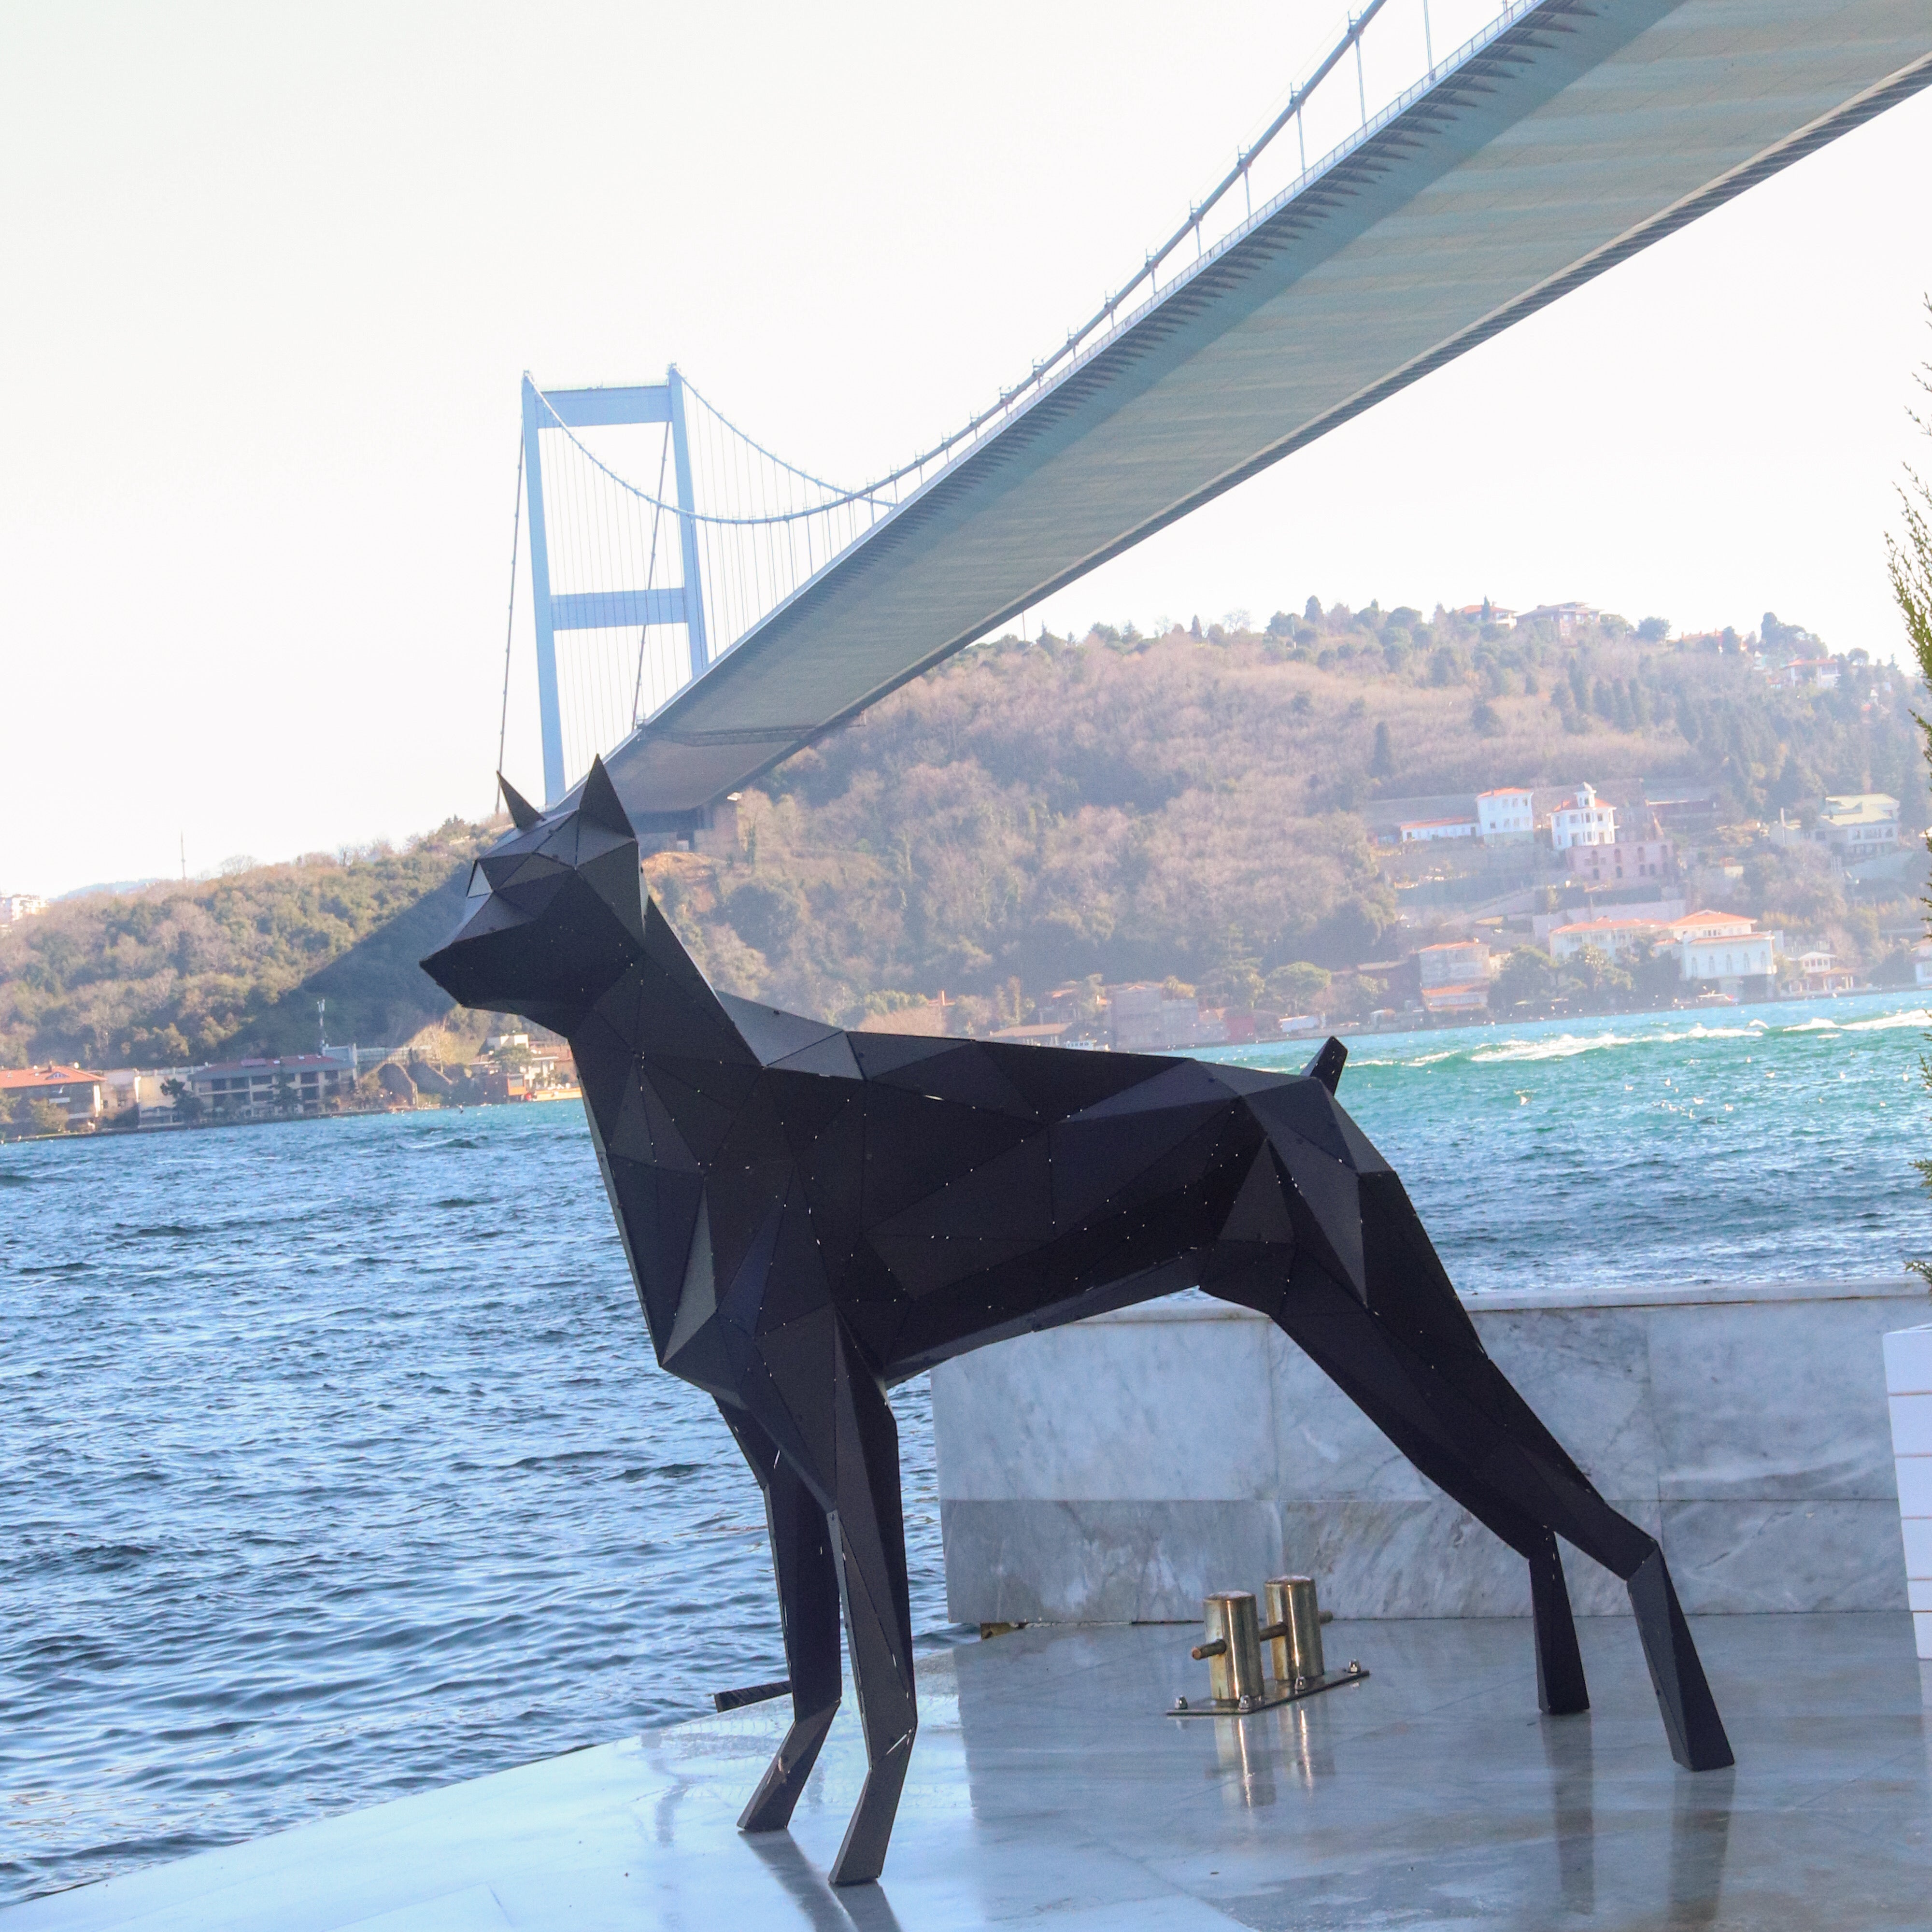 3D Metal Sculpture of Dog Breed Doberman